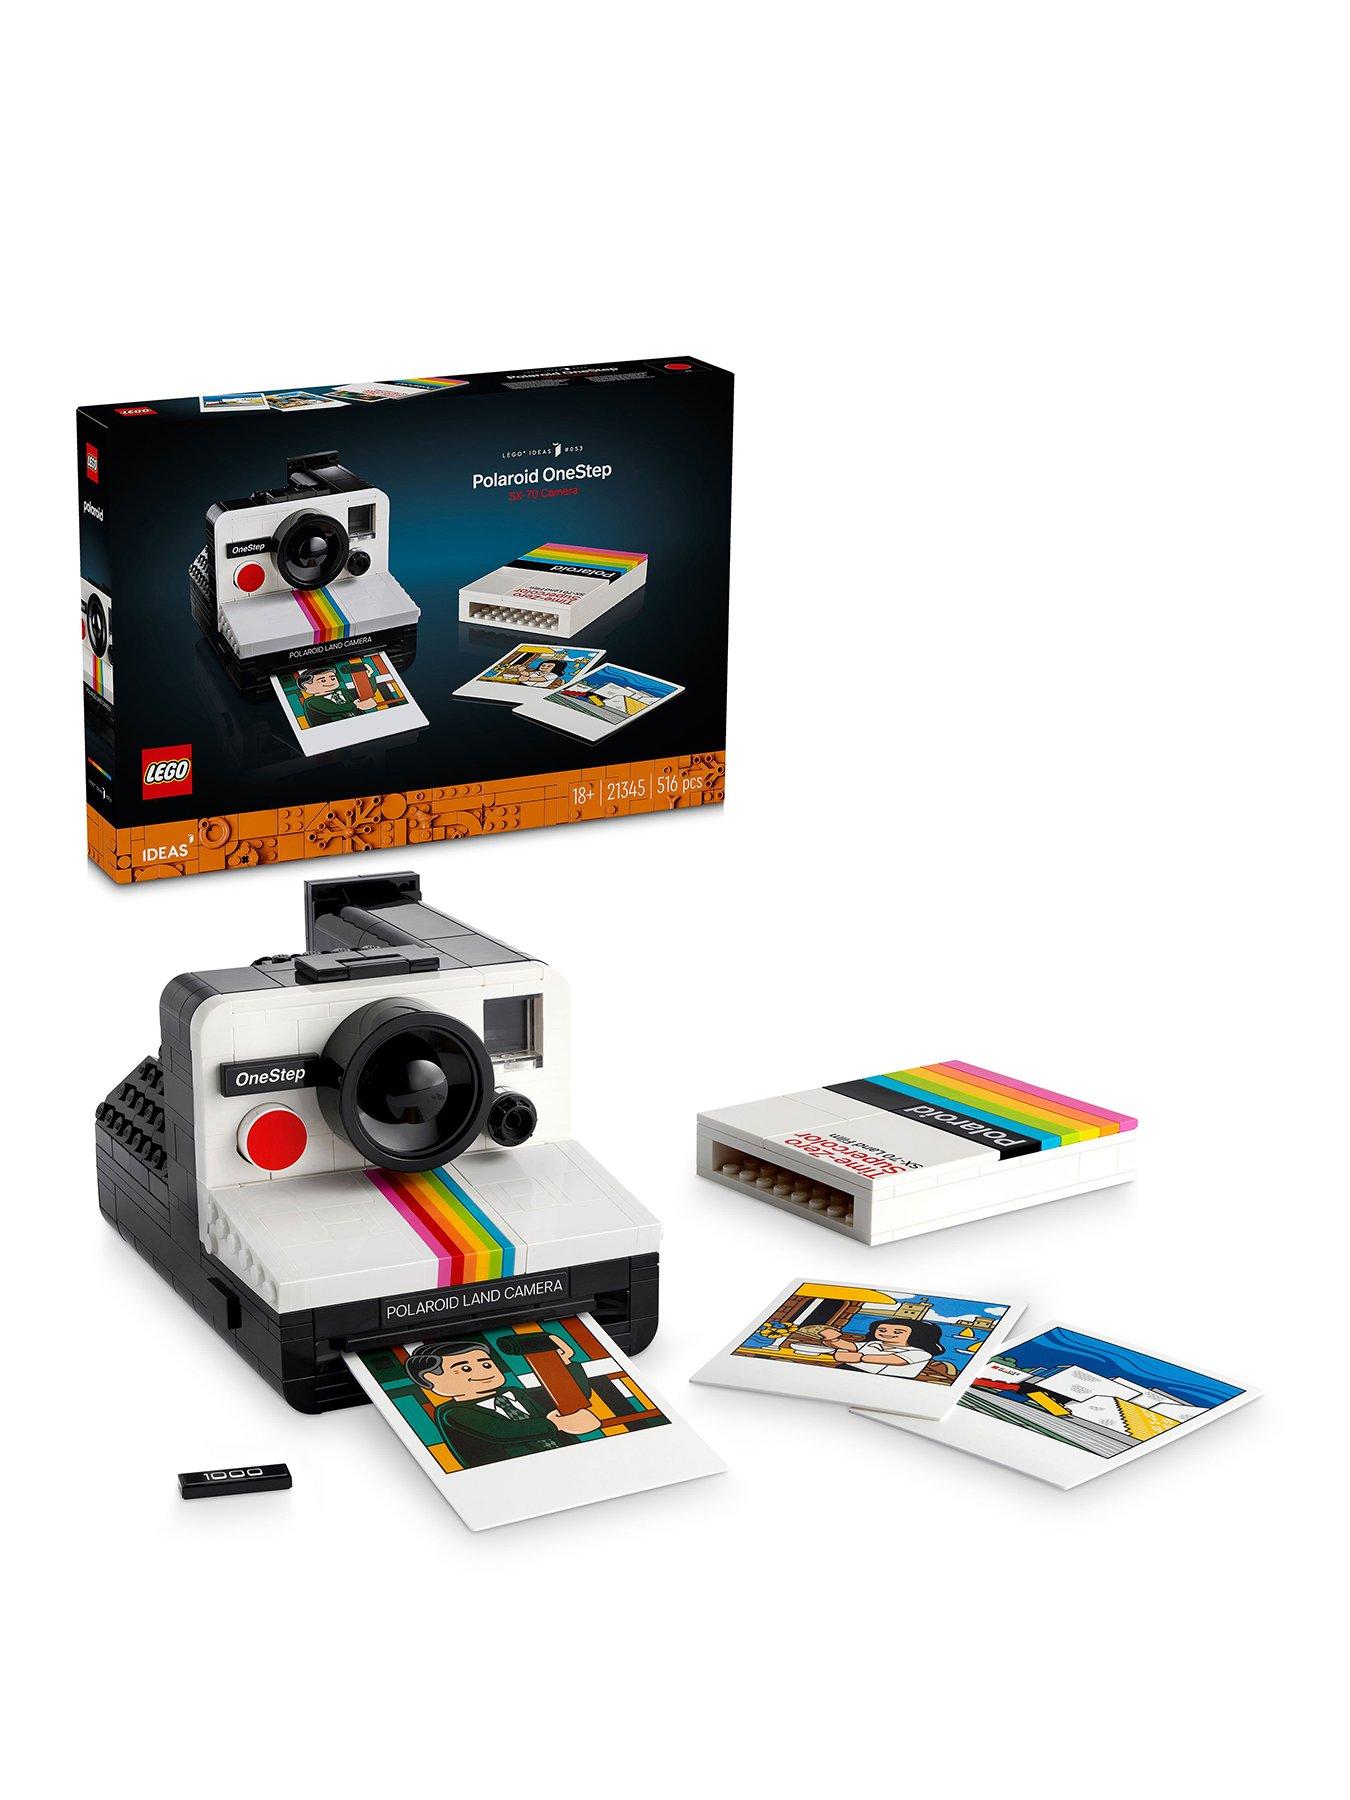 LEGO Ideas Polaroid OneStep SX-70 Camera Set 21345